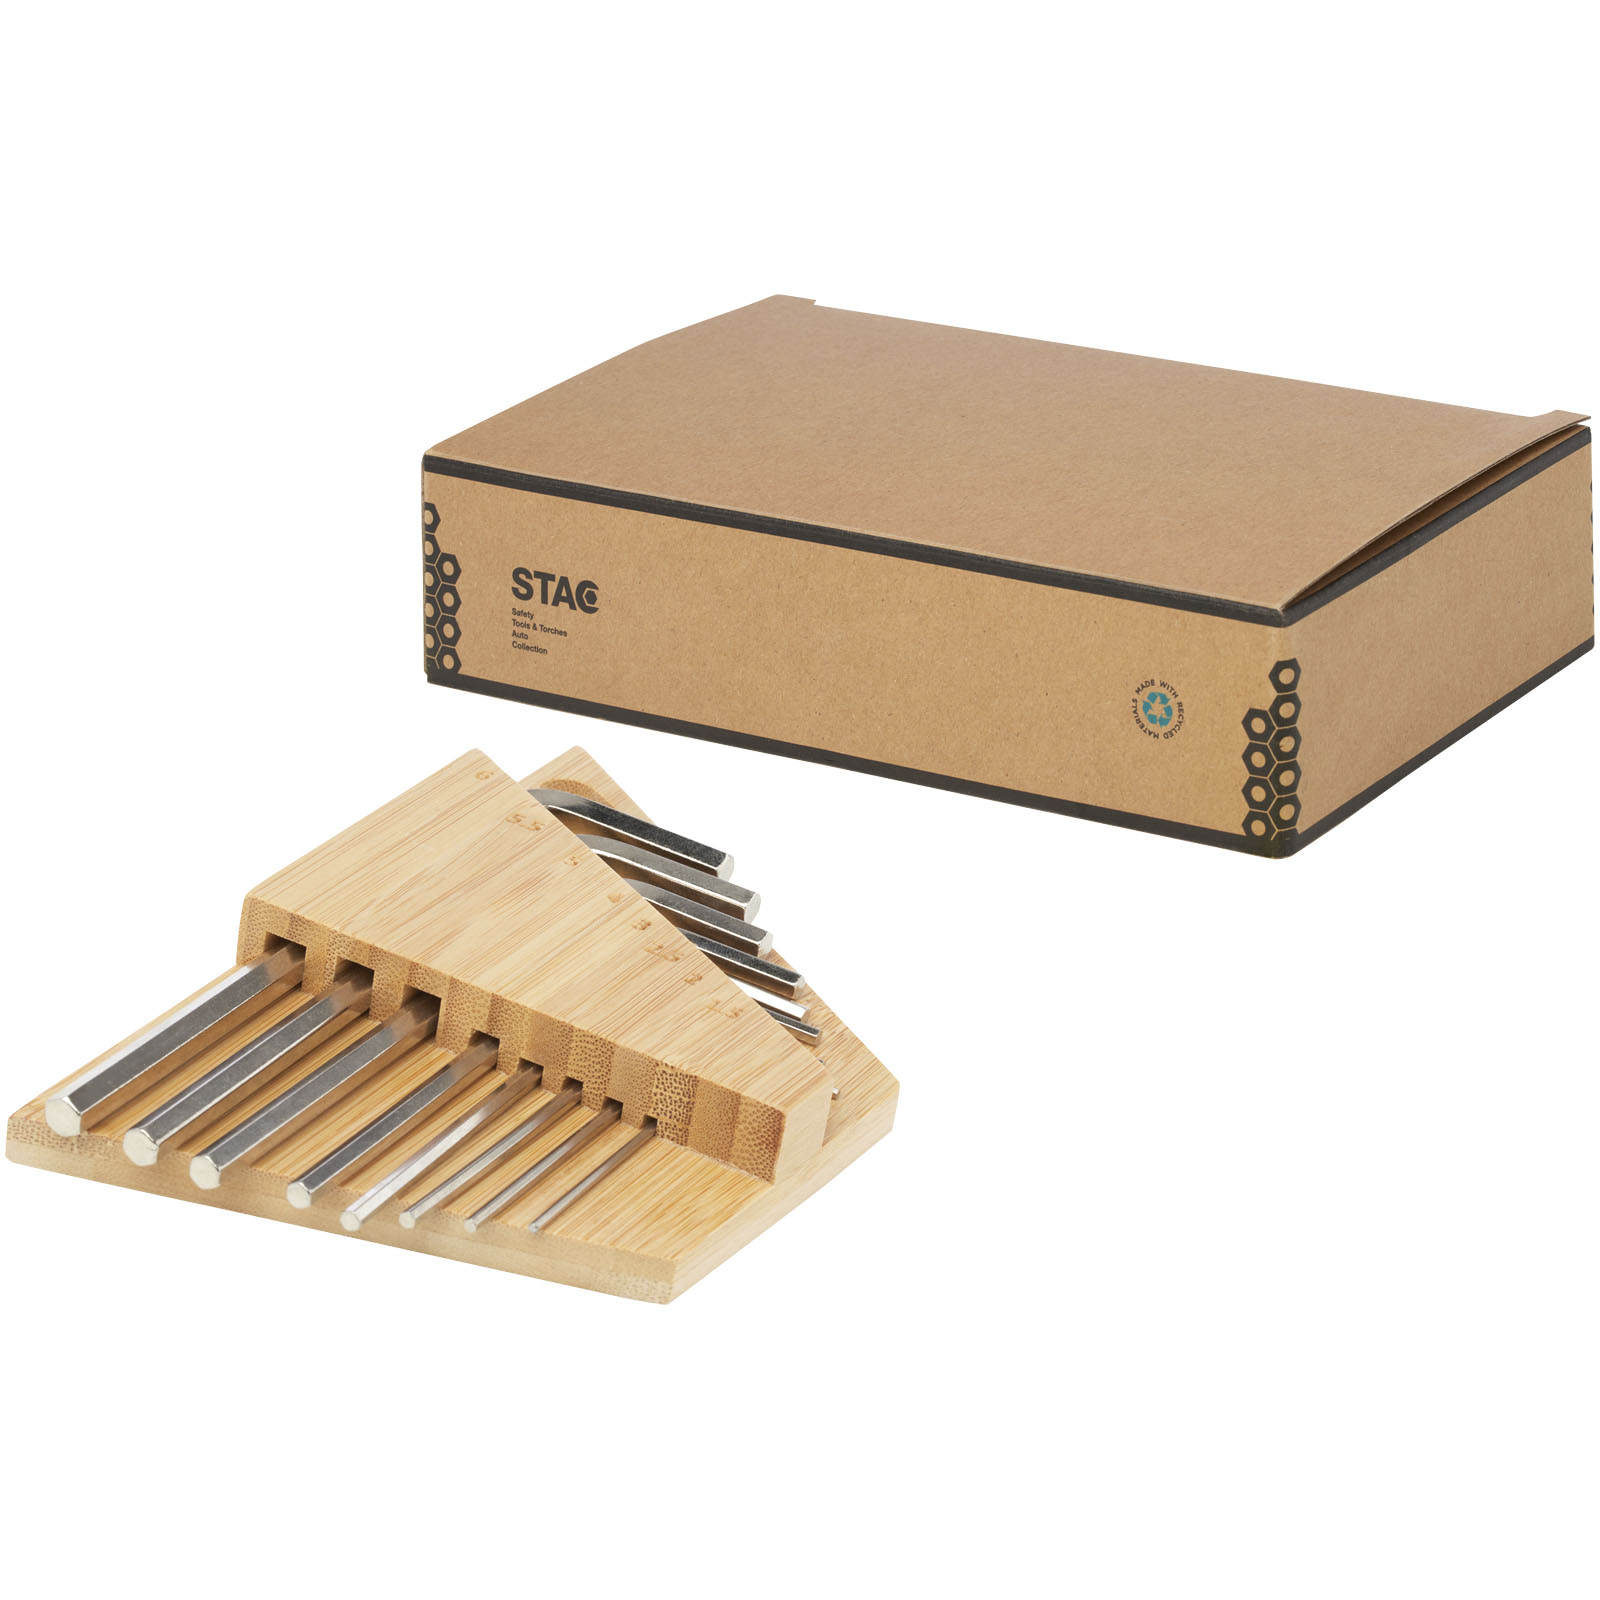 Advertising Tool sets - Allen bamboo hex key tool set - 5